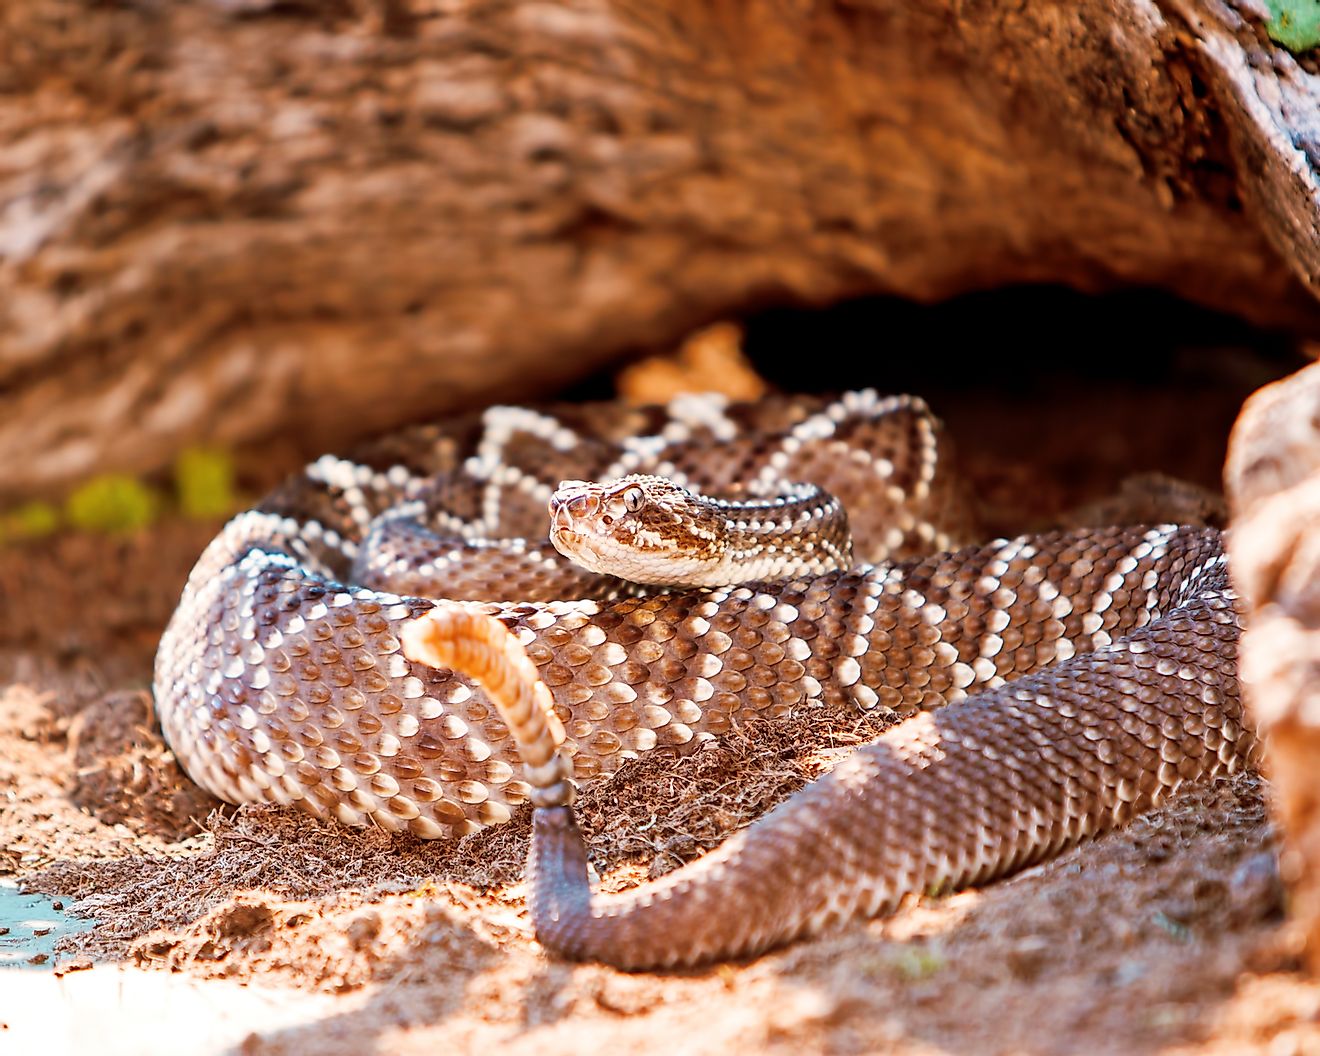 Dangerous South American rattlesnake (Crotalus durissus) on sand. Image credit: Susan Schmitz/Shutterstock.com